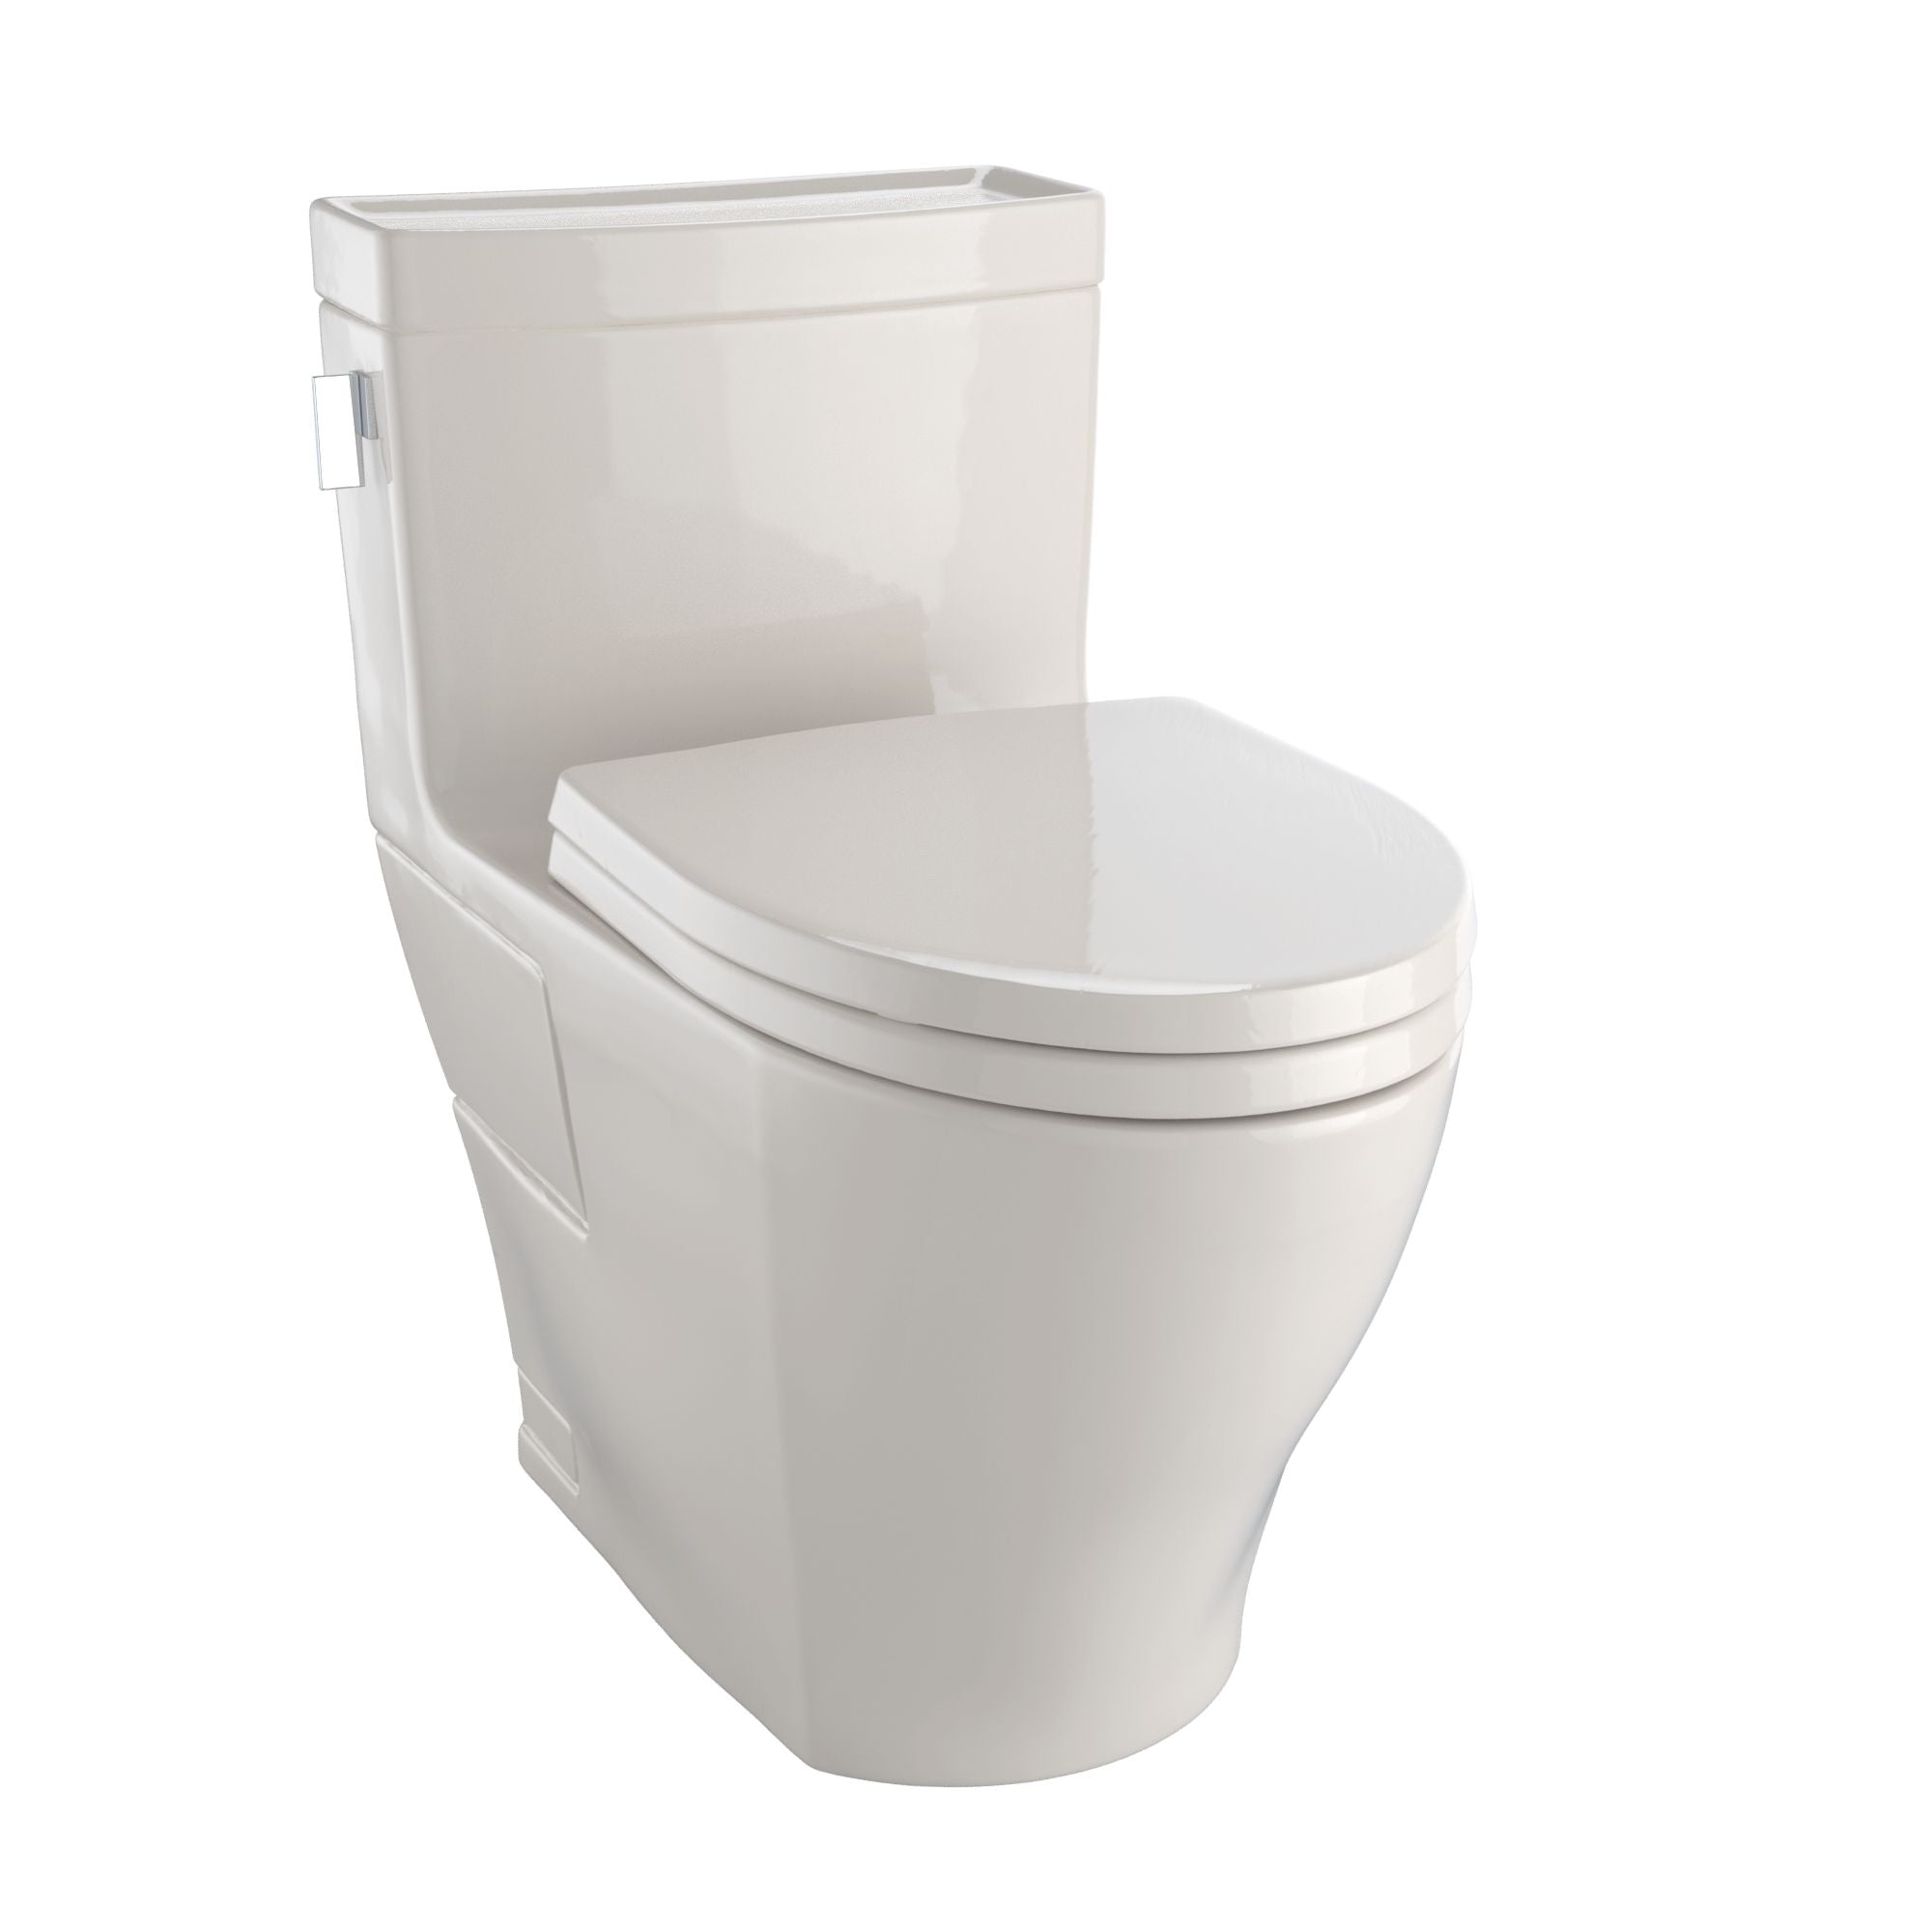 Toto Legato One-piece High-efficiency Toilet 1.28 GPF